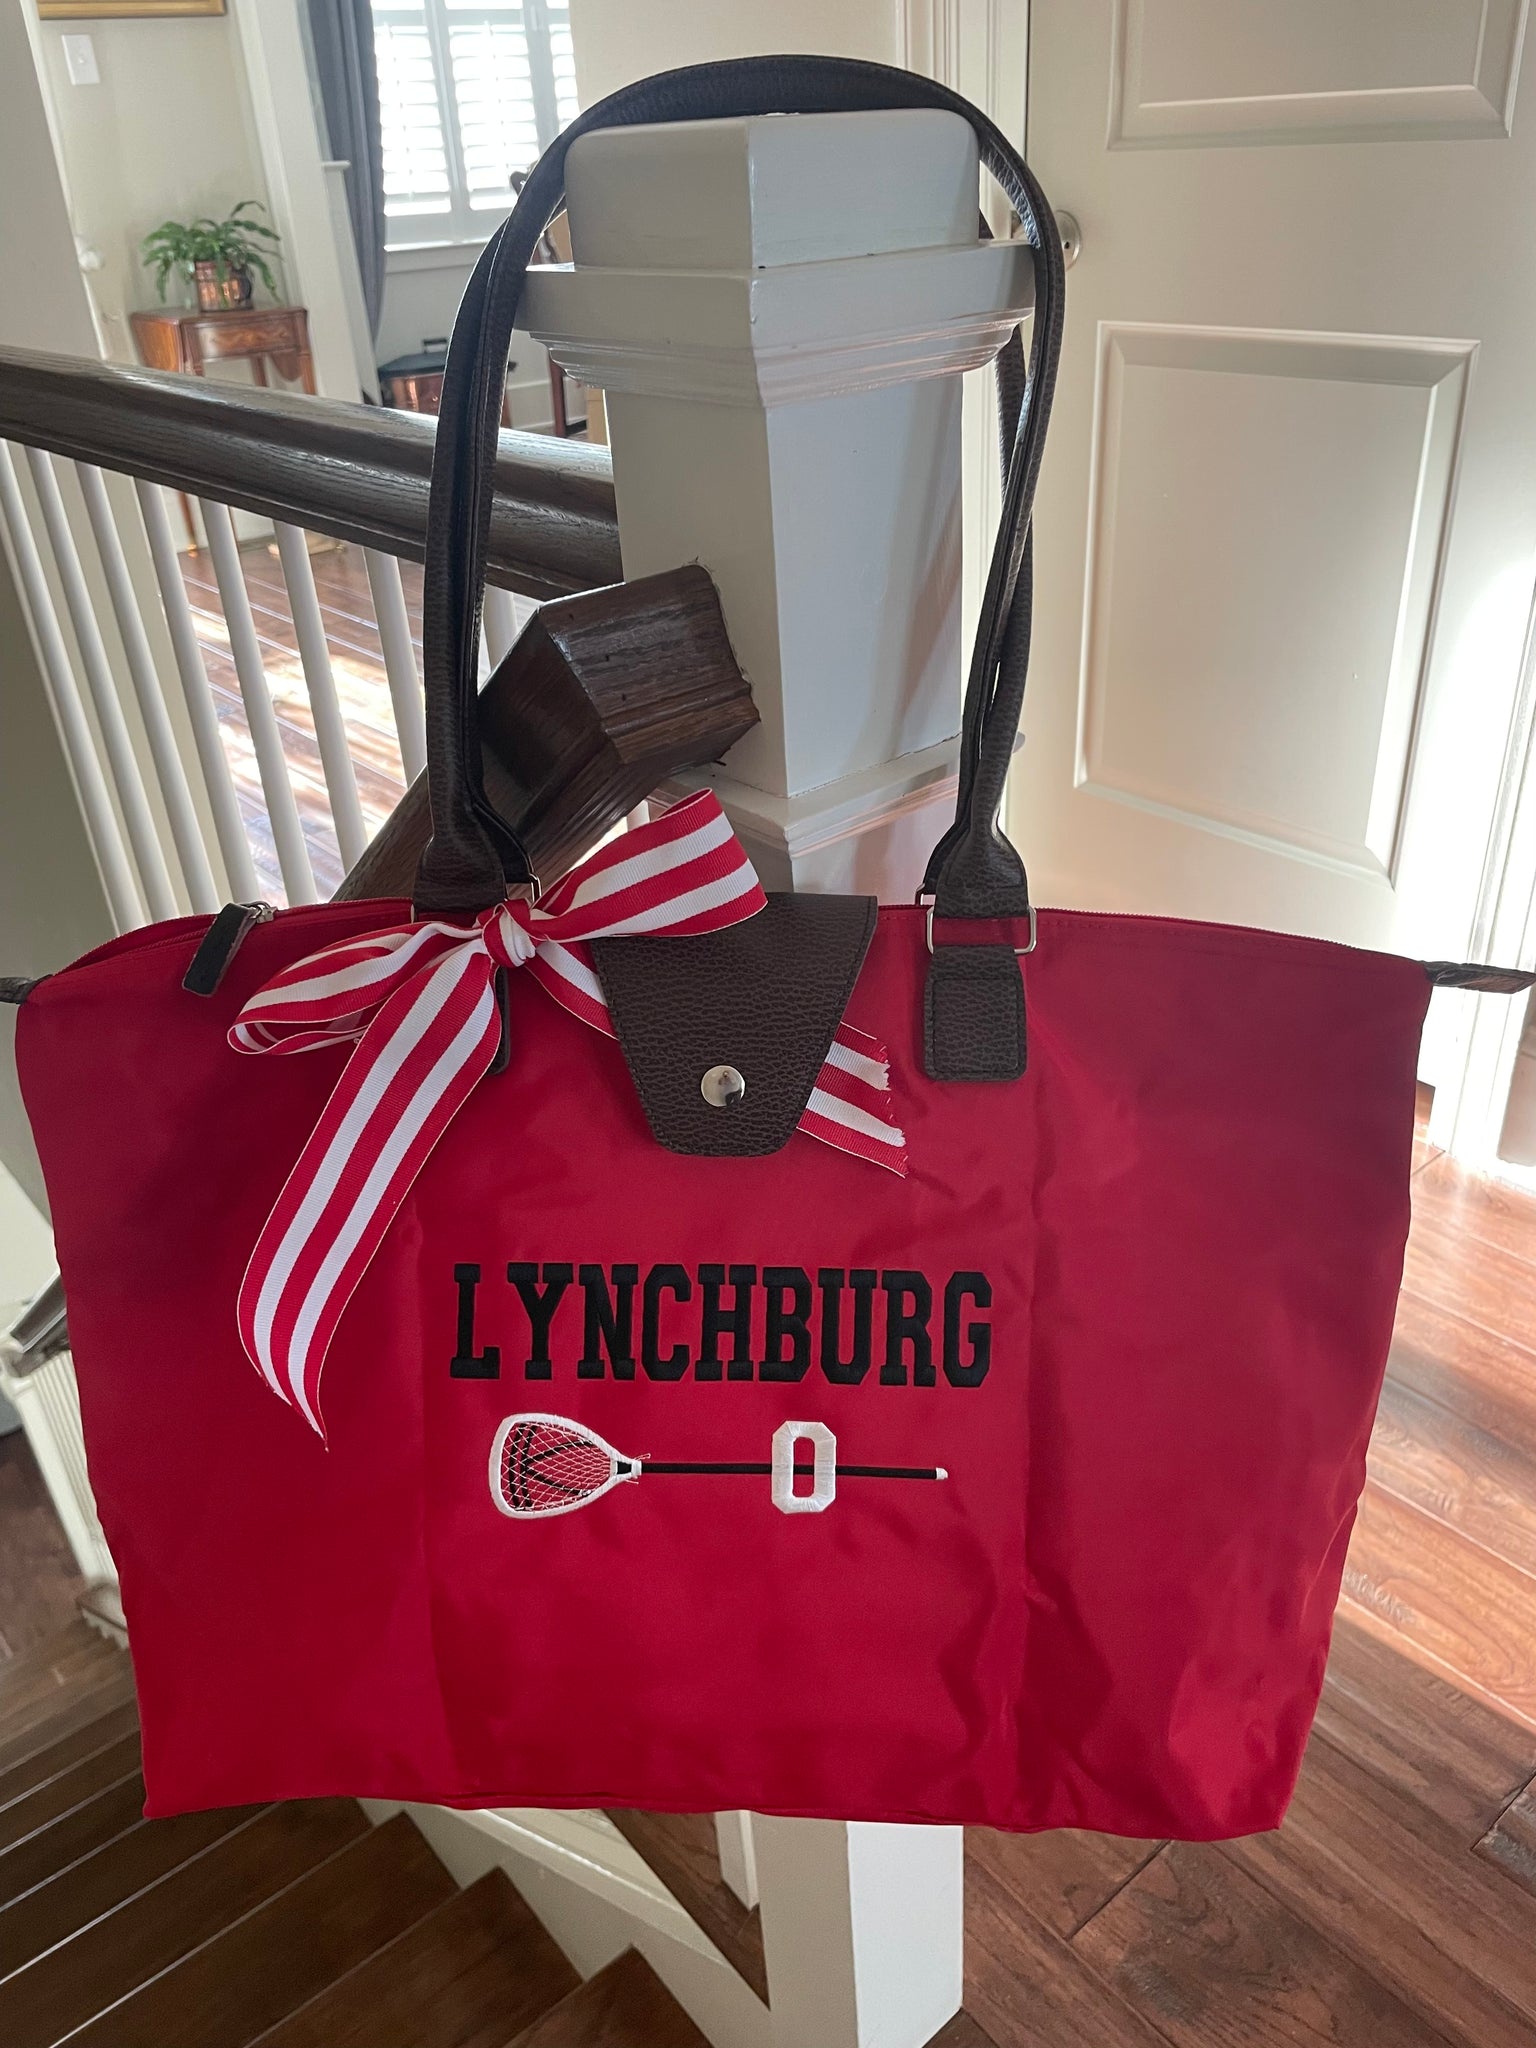 Lynchburg University Classic Bag